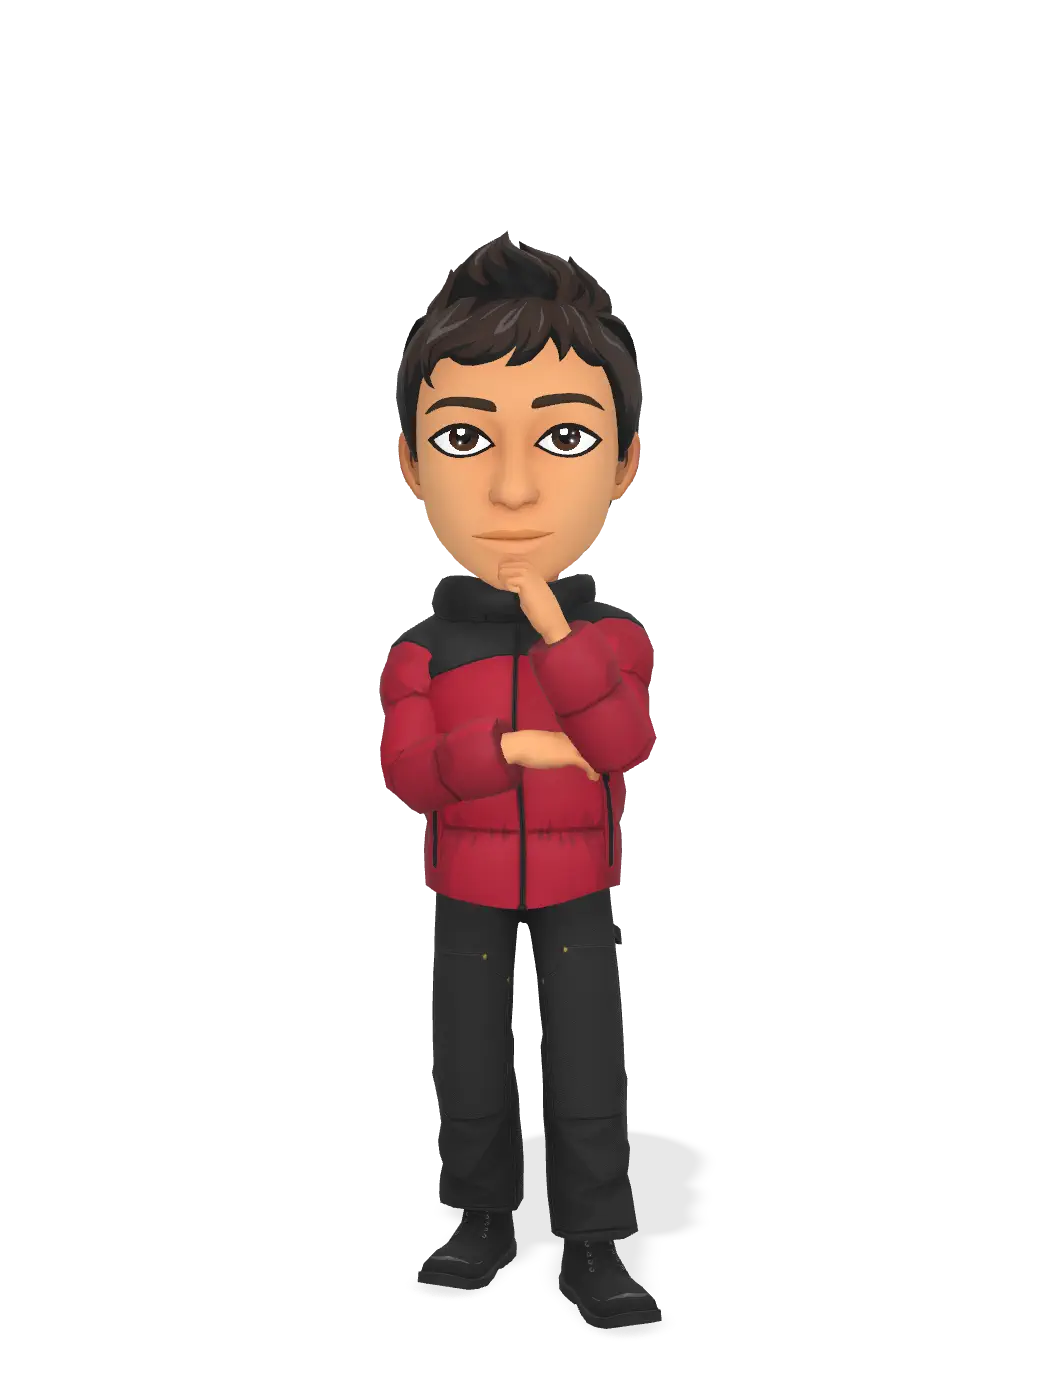 3D Bitmoji for lukeflock avatar